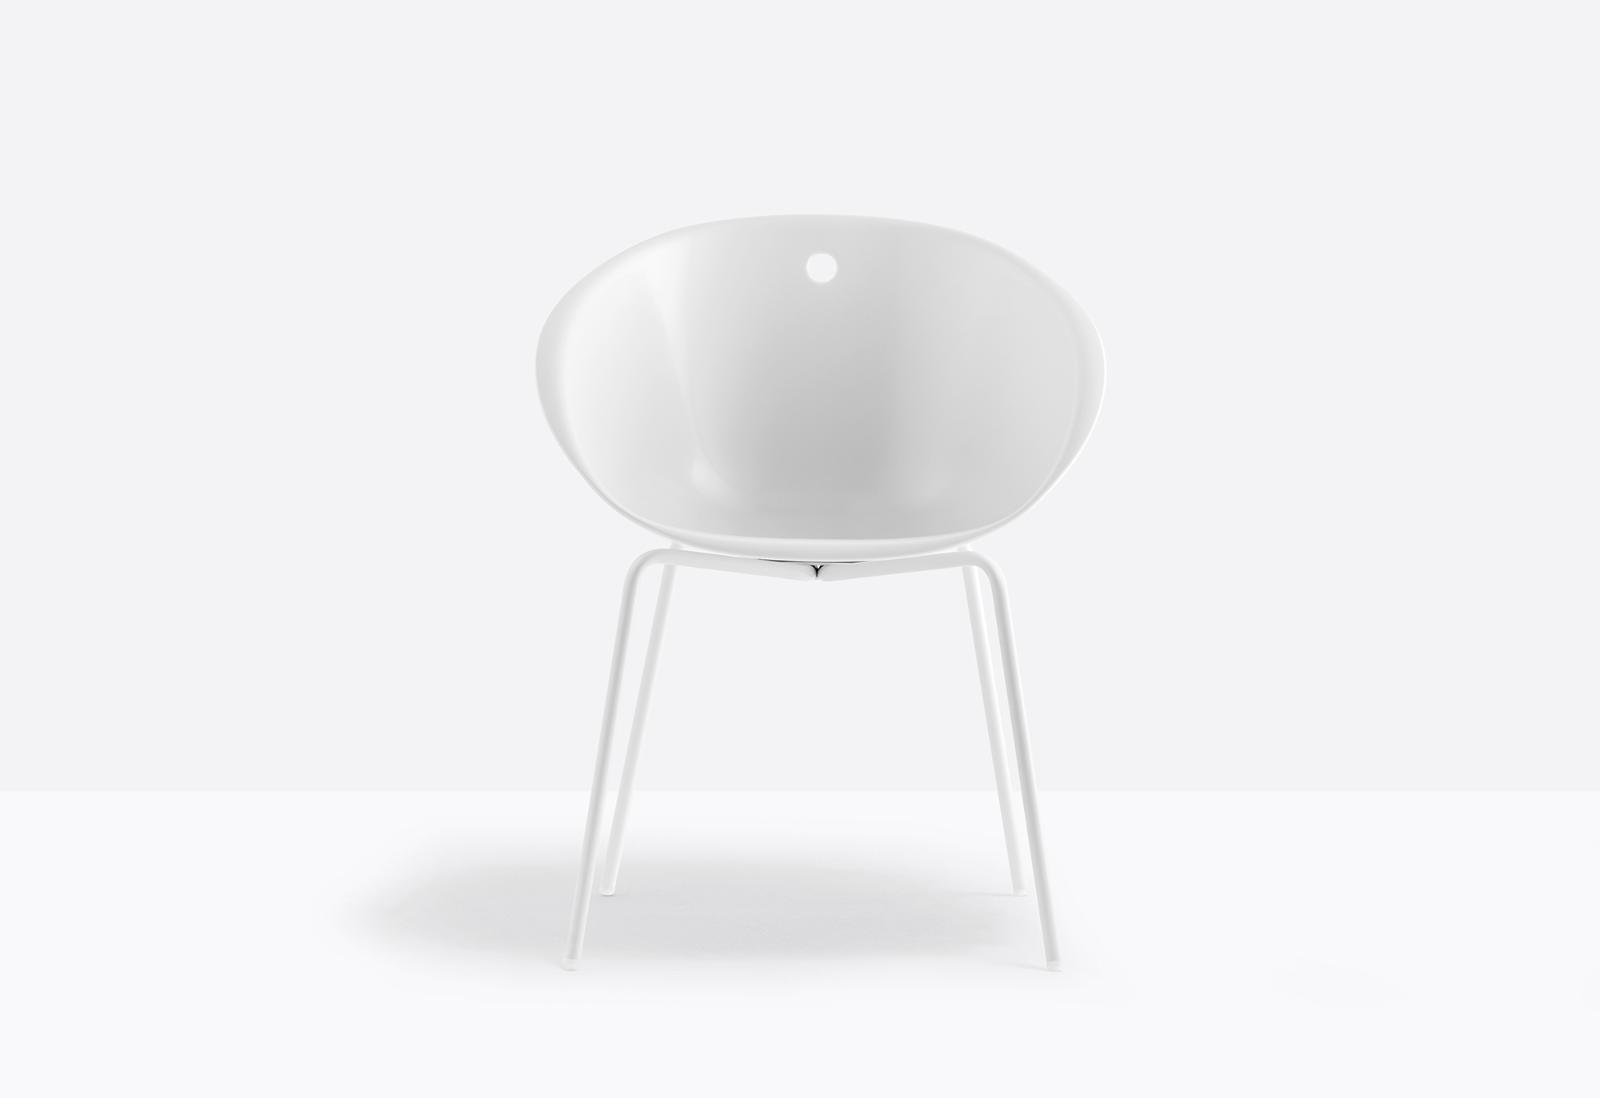 Gliss 900 Chair from Pedrali, designed by CLAUDIO DONDOLI - MARCO POCCI